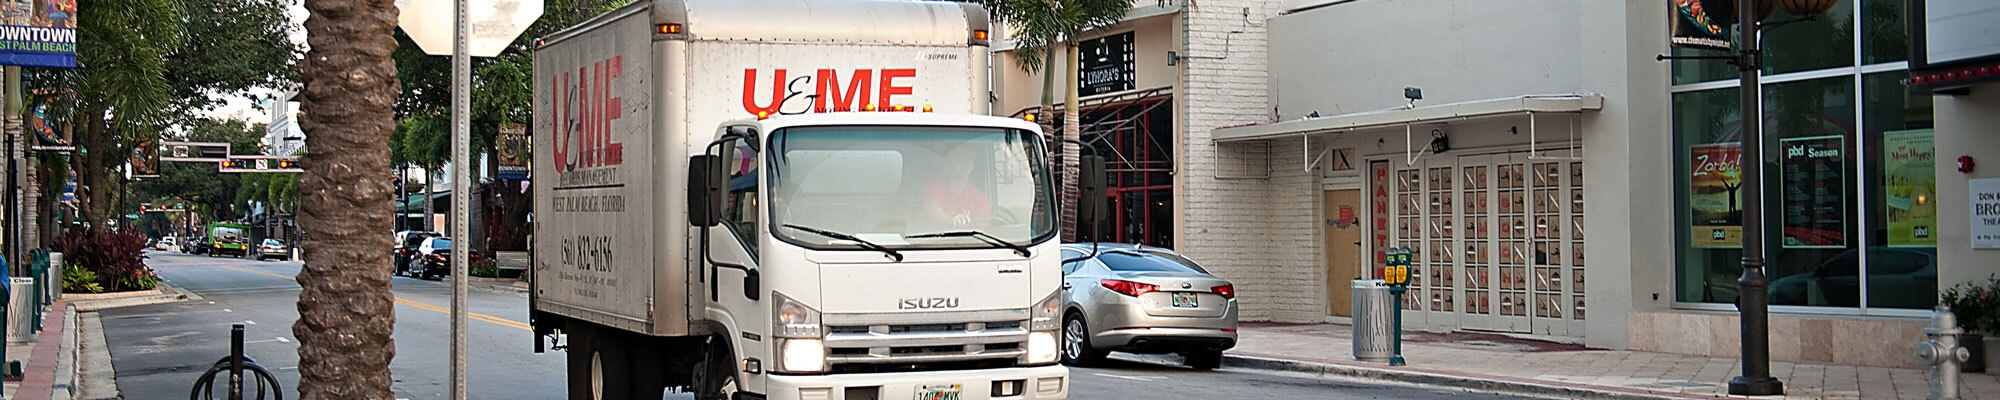 U&Me truck